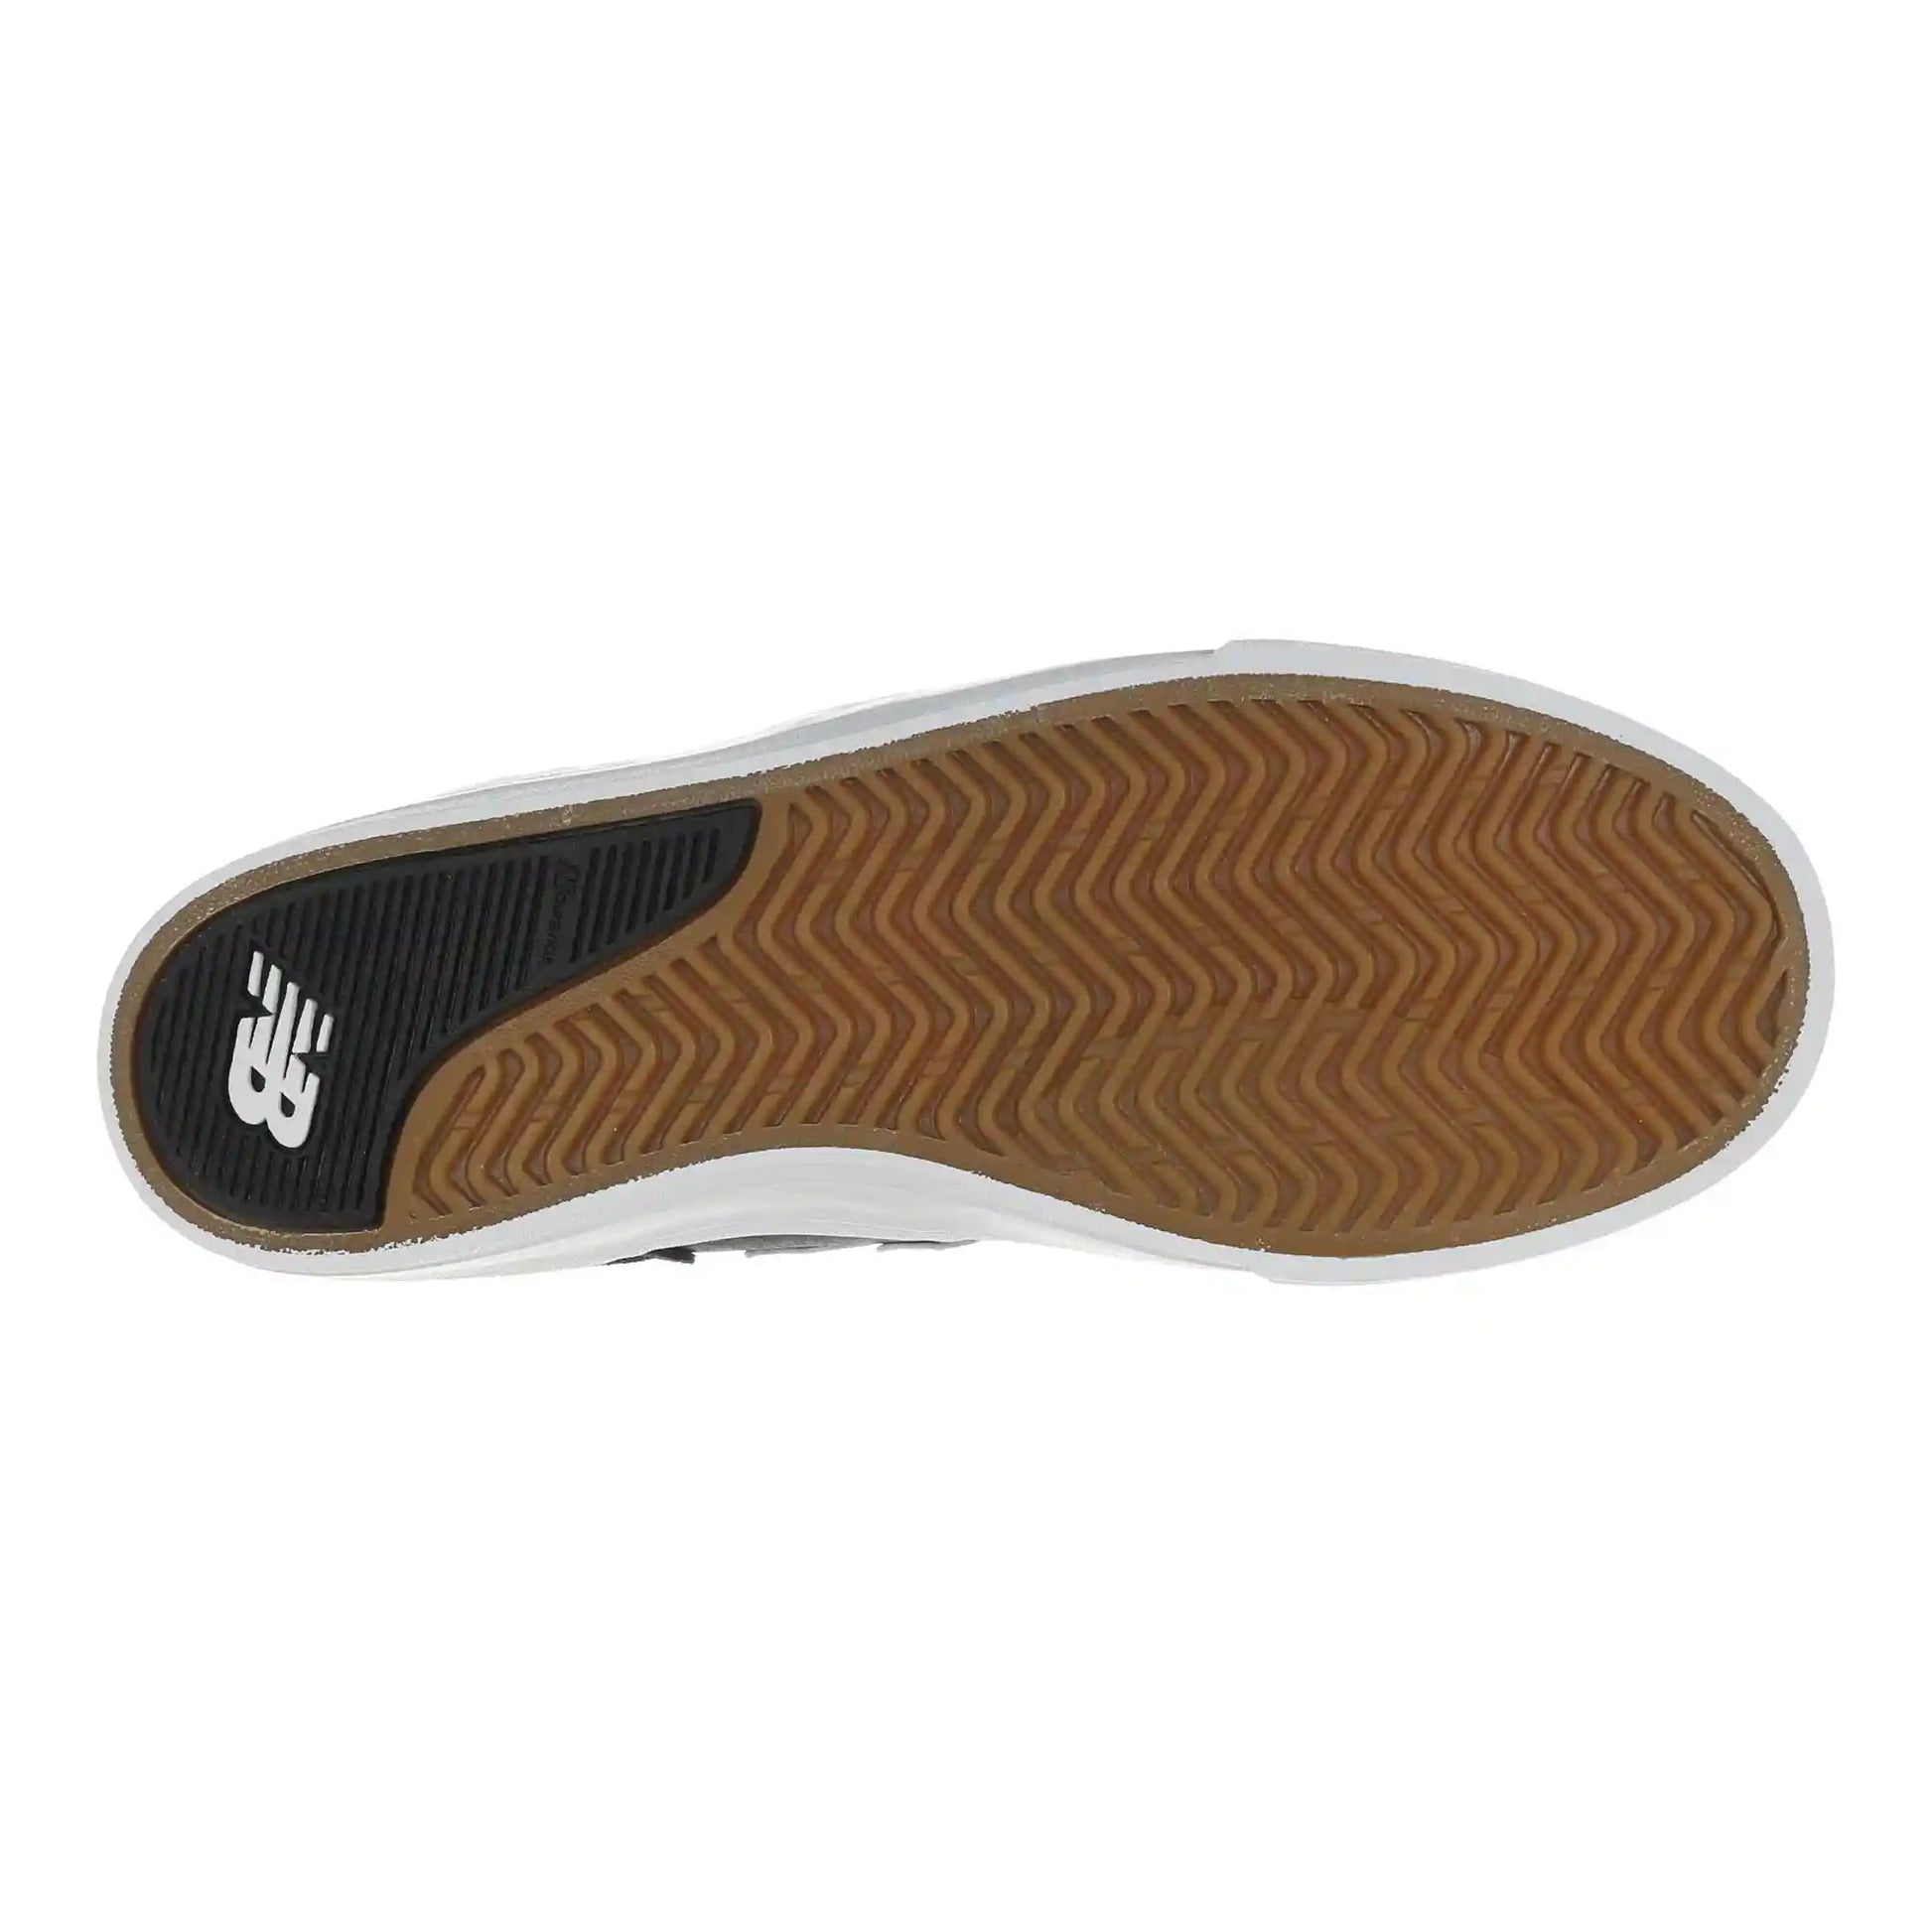 New Balance Numeric 306 Foy, black/white - Tiki Room Skateboards - 5